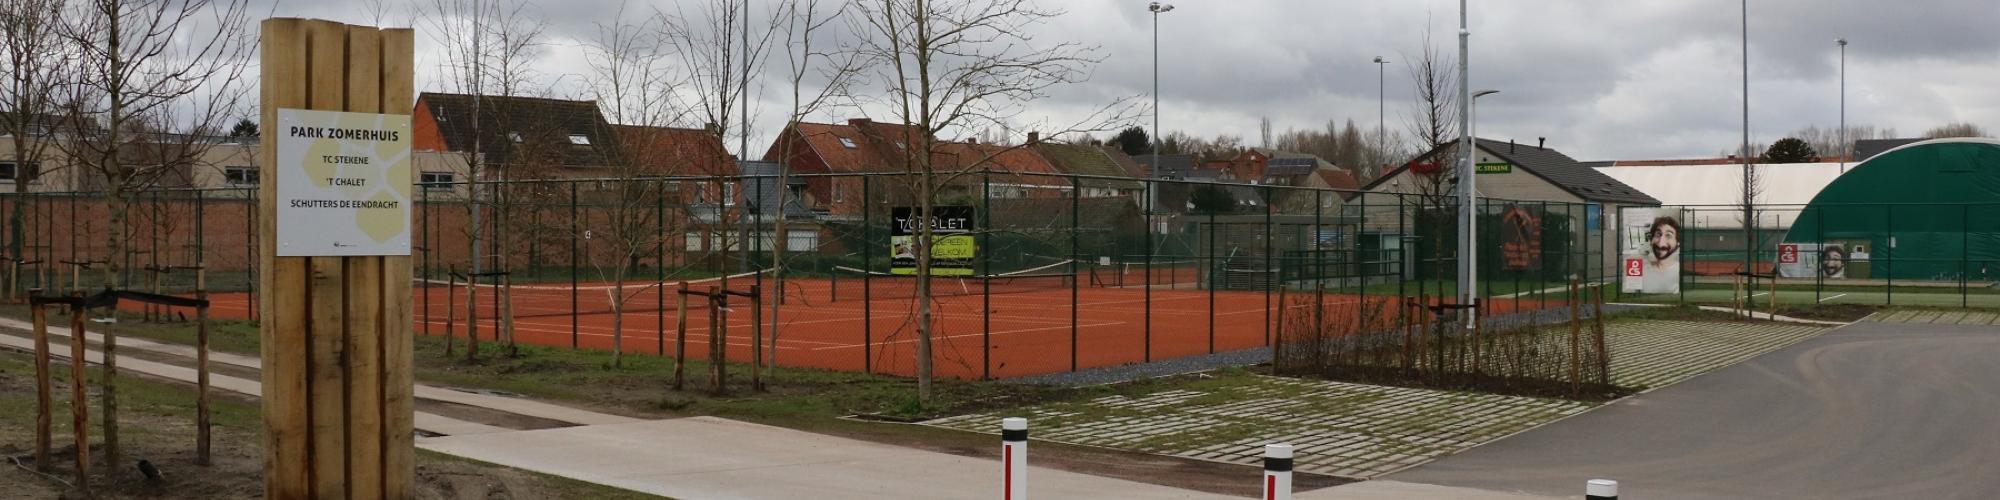 tennisclub Stekene achterzijde site